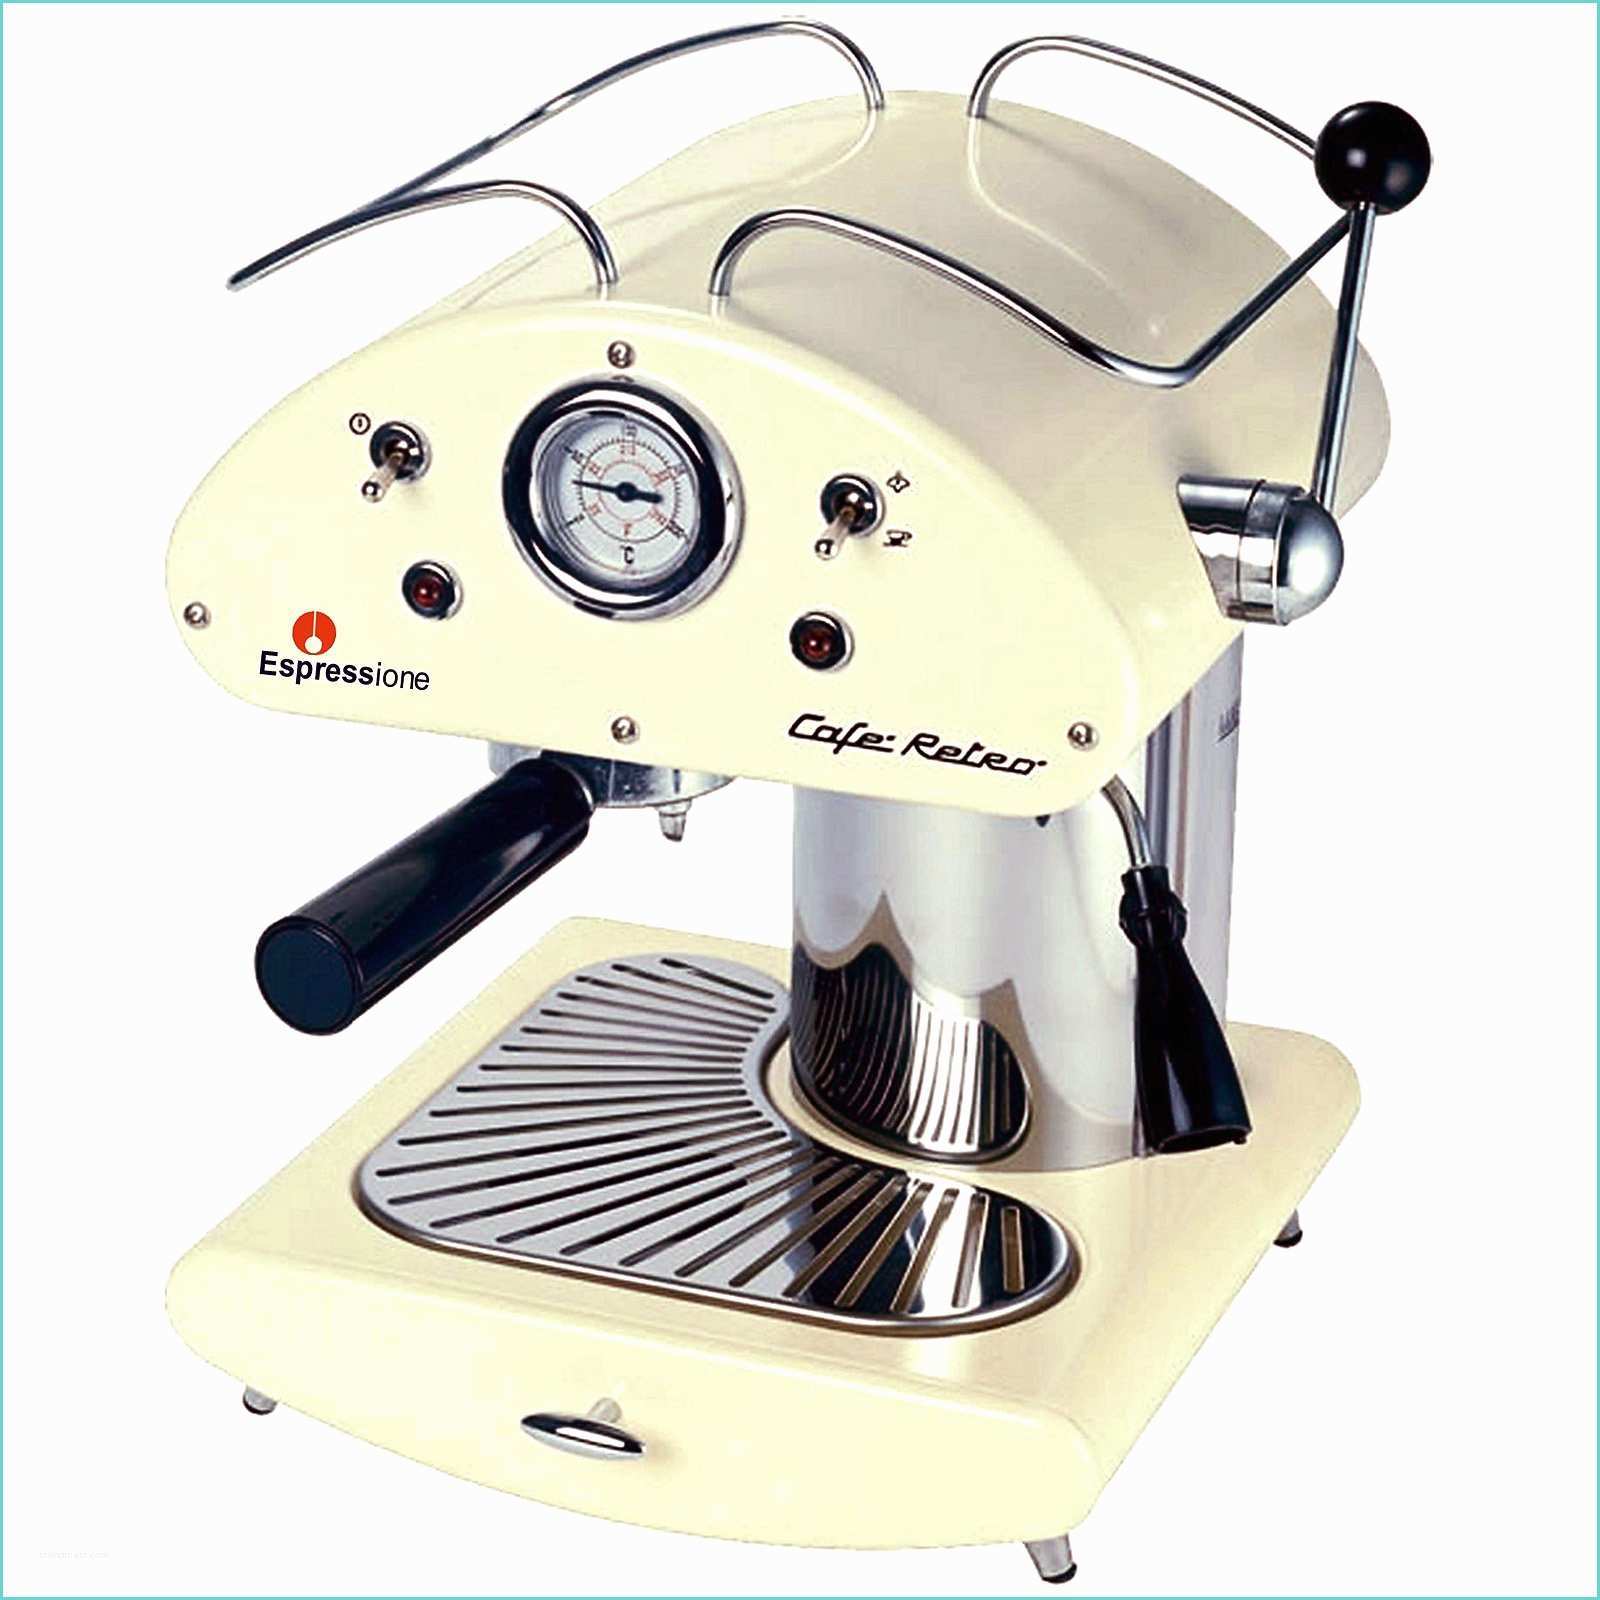 Machine A Cafe Retro Espressione 1385 Cafe Retro Espresso Machine White at